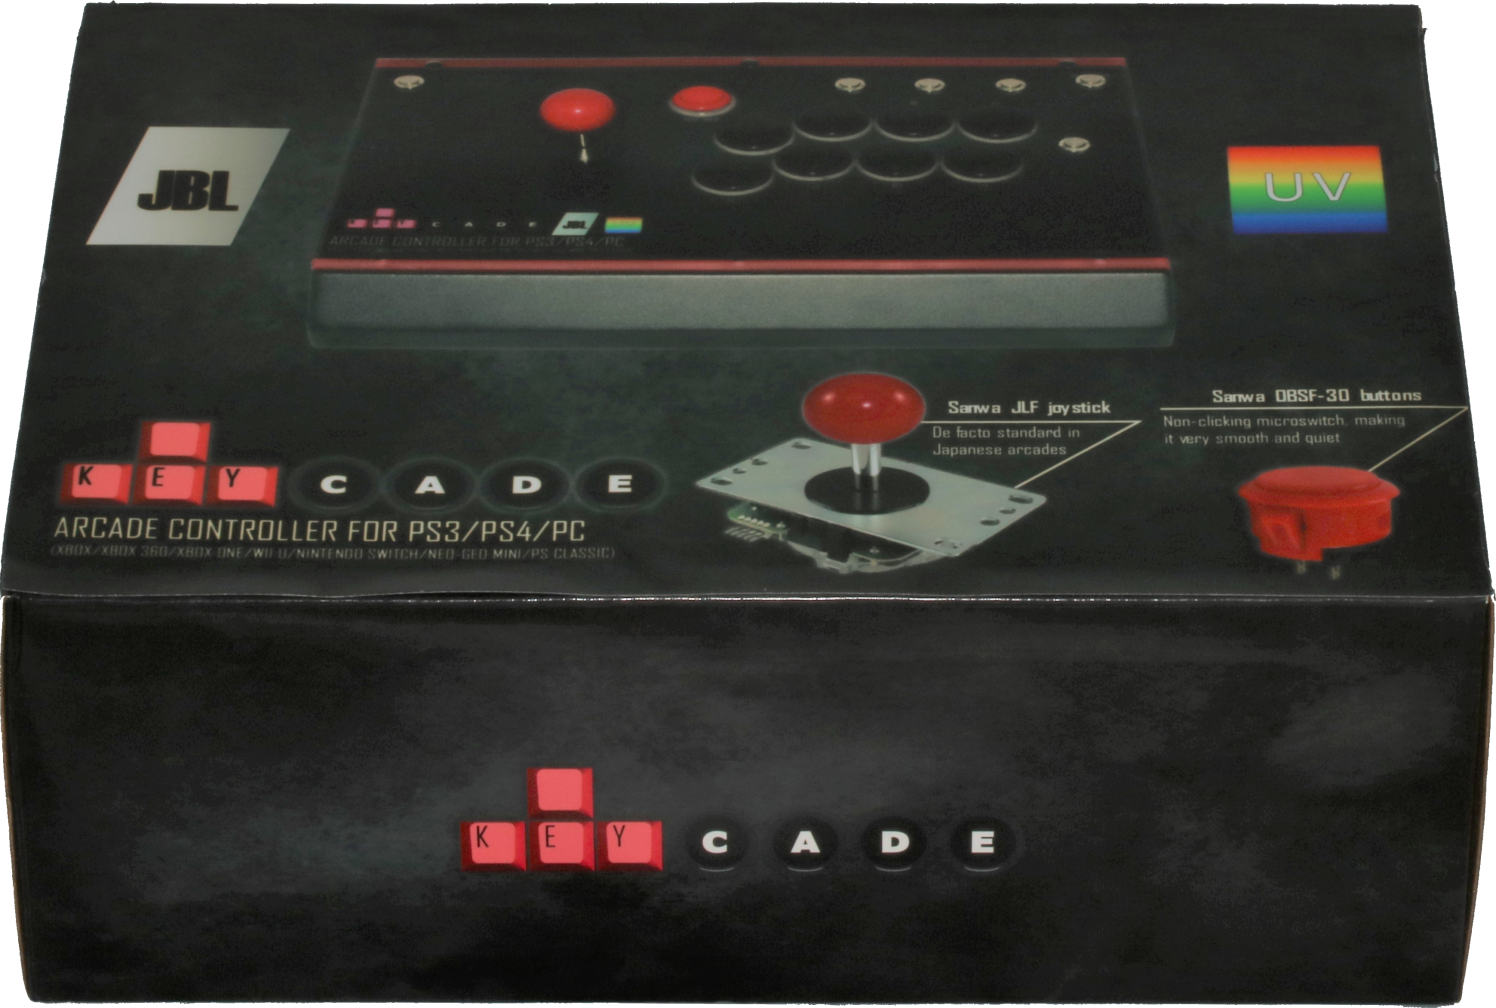 KeyCade JBL UVP arcade controller